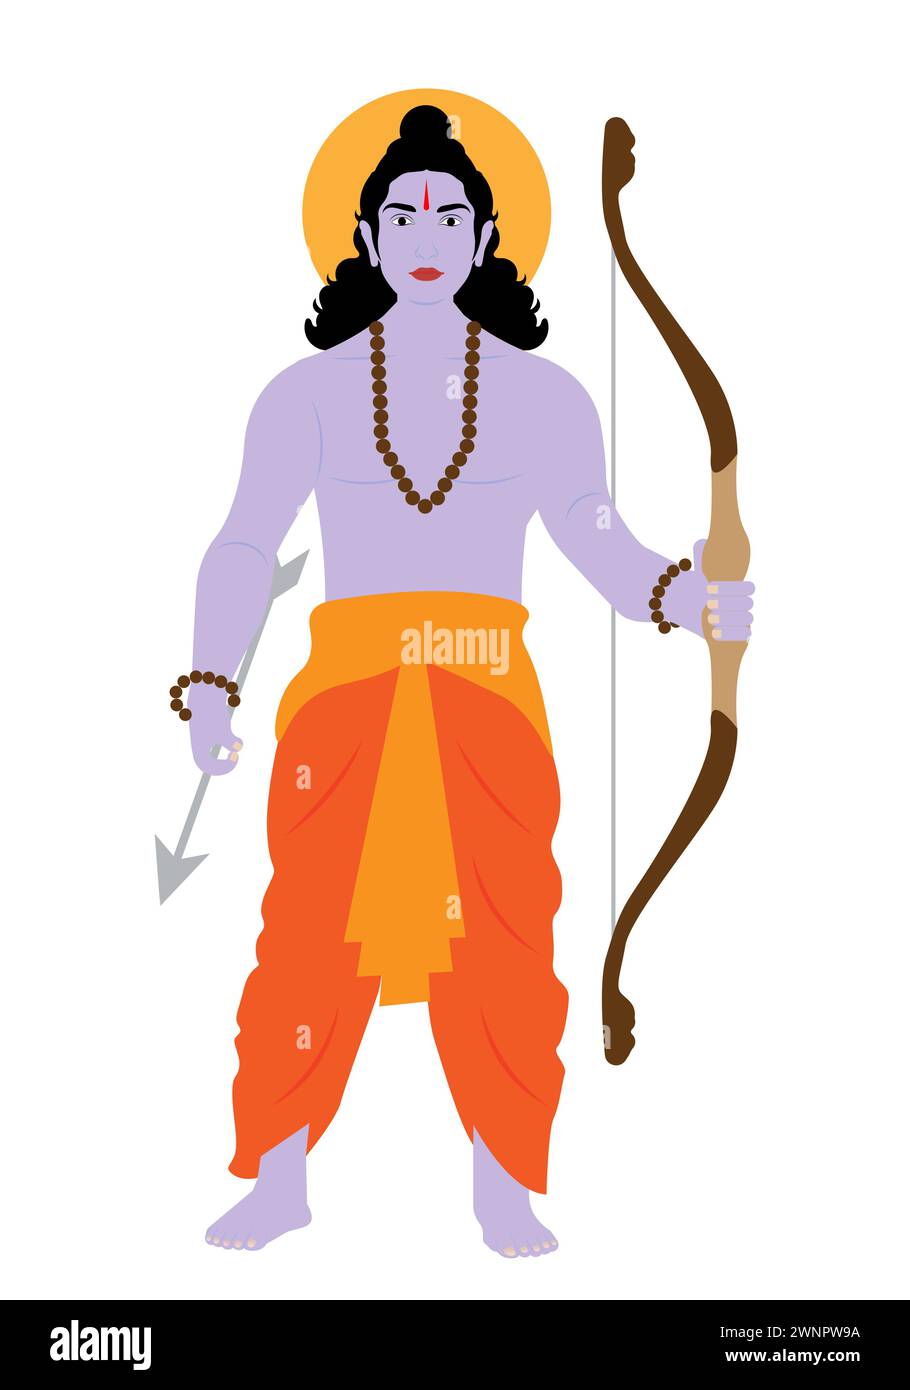 Illustration von Lord RAM mit Safrankleid, das Sharanga (Bogen) hält. Stock Vektor